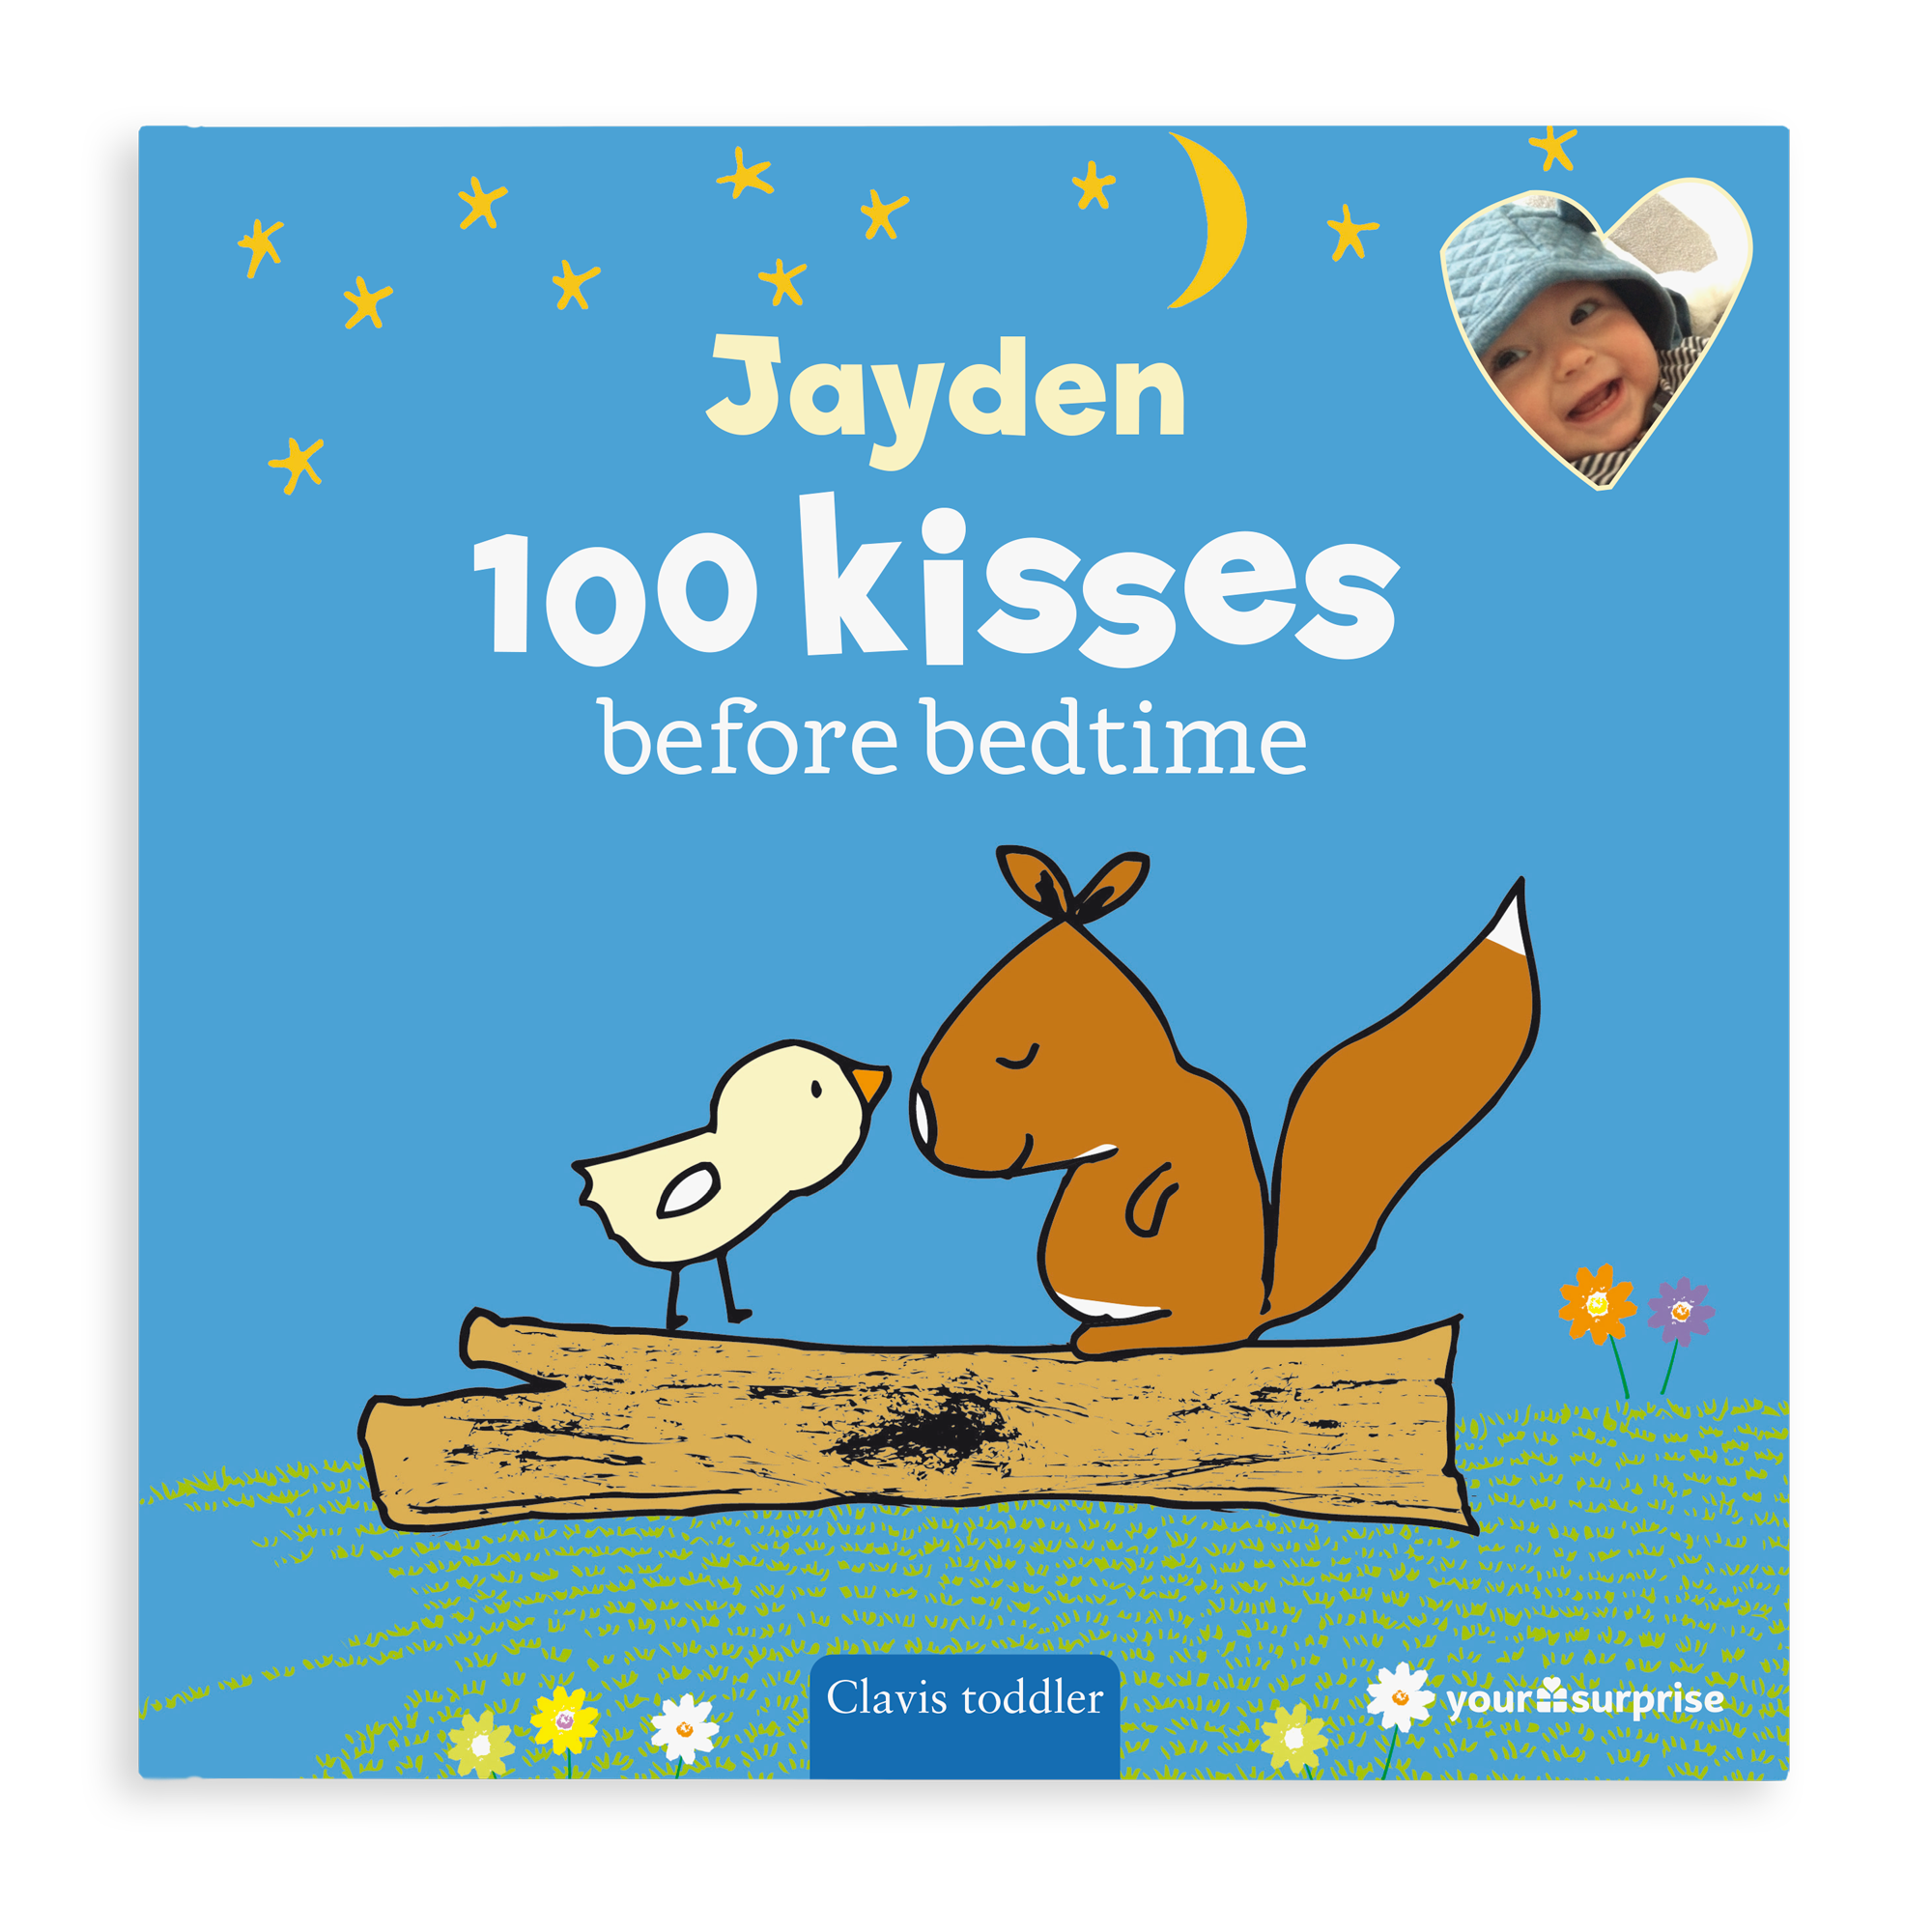 Personalised children's book - 100 kisses before bedtime - Hardcover